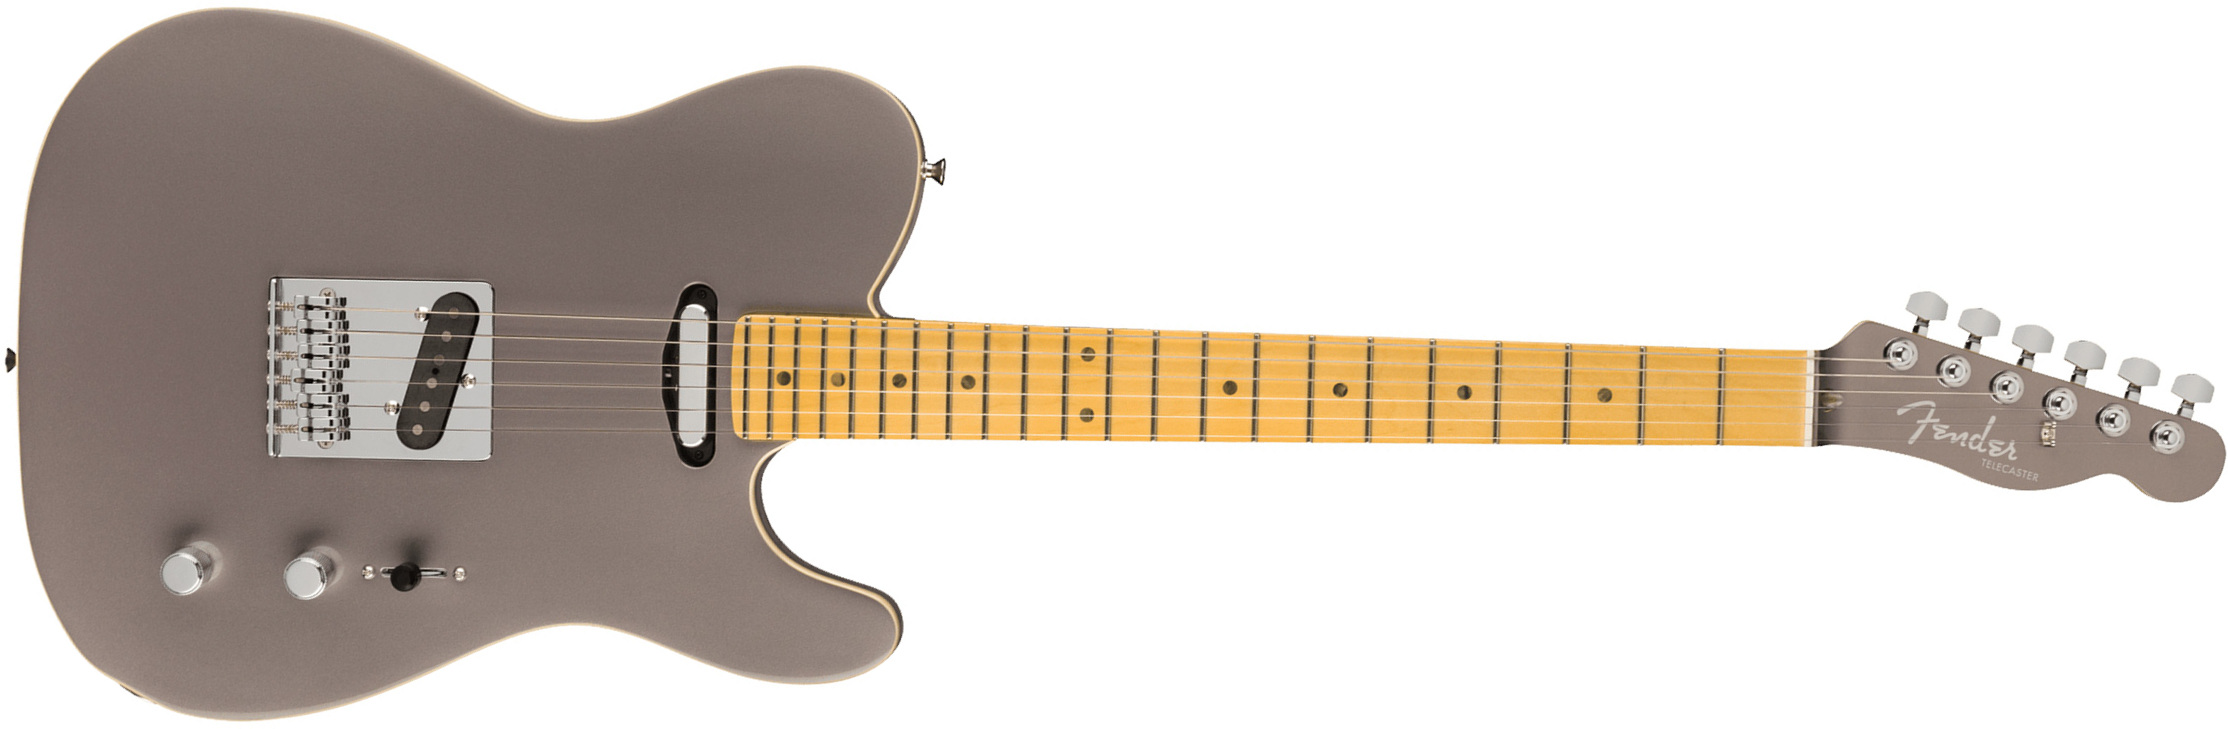 Fender Tele Aerodyne Special Jap 2s Ht Mn - Dolphin Gray Metallic - Televorm elektrische gitaar - Main picture